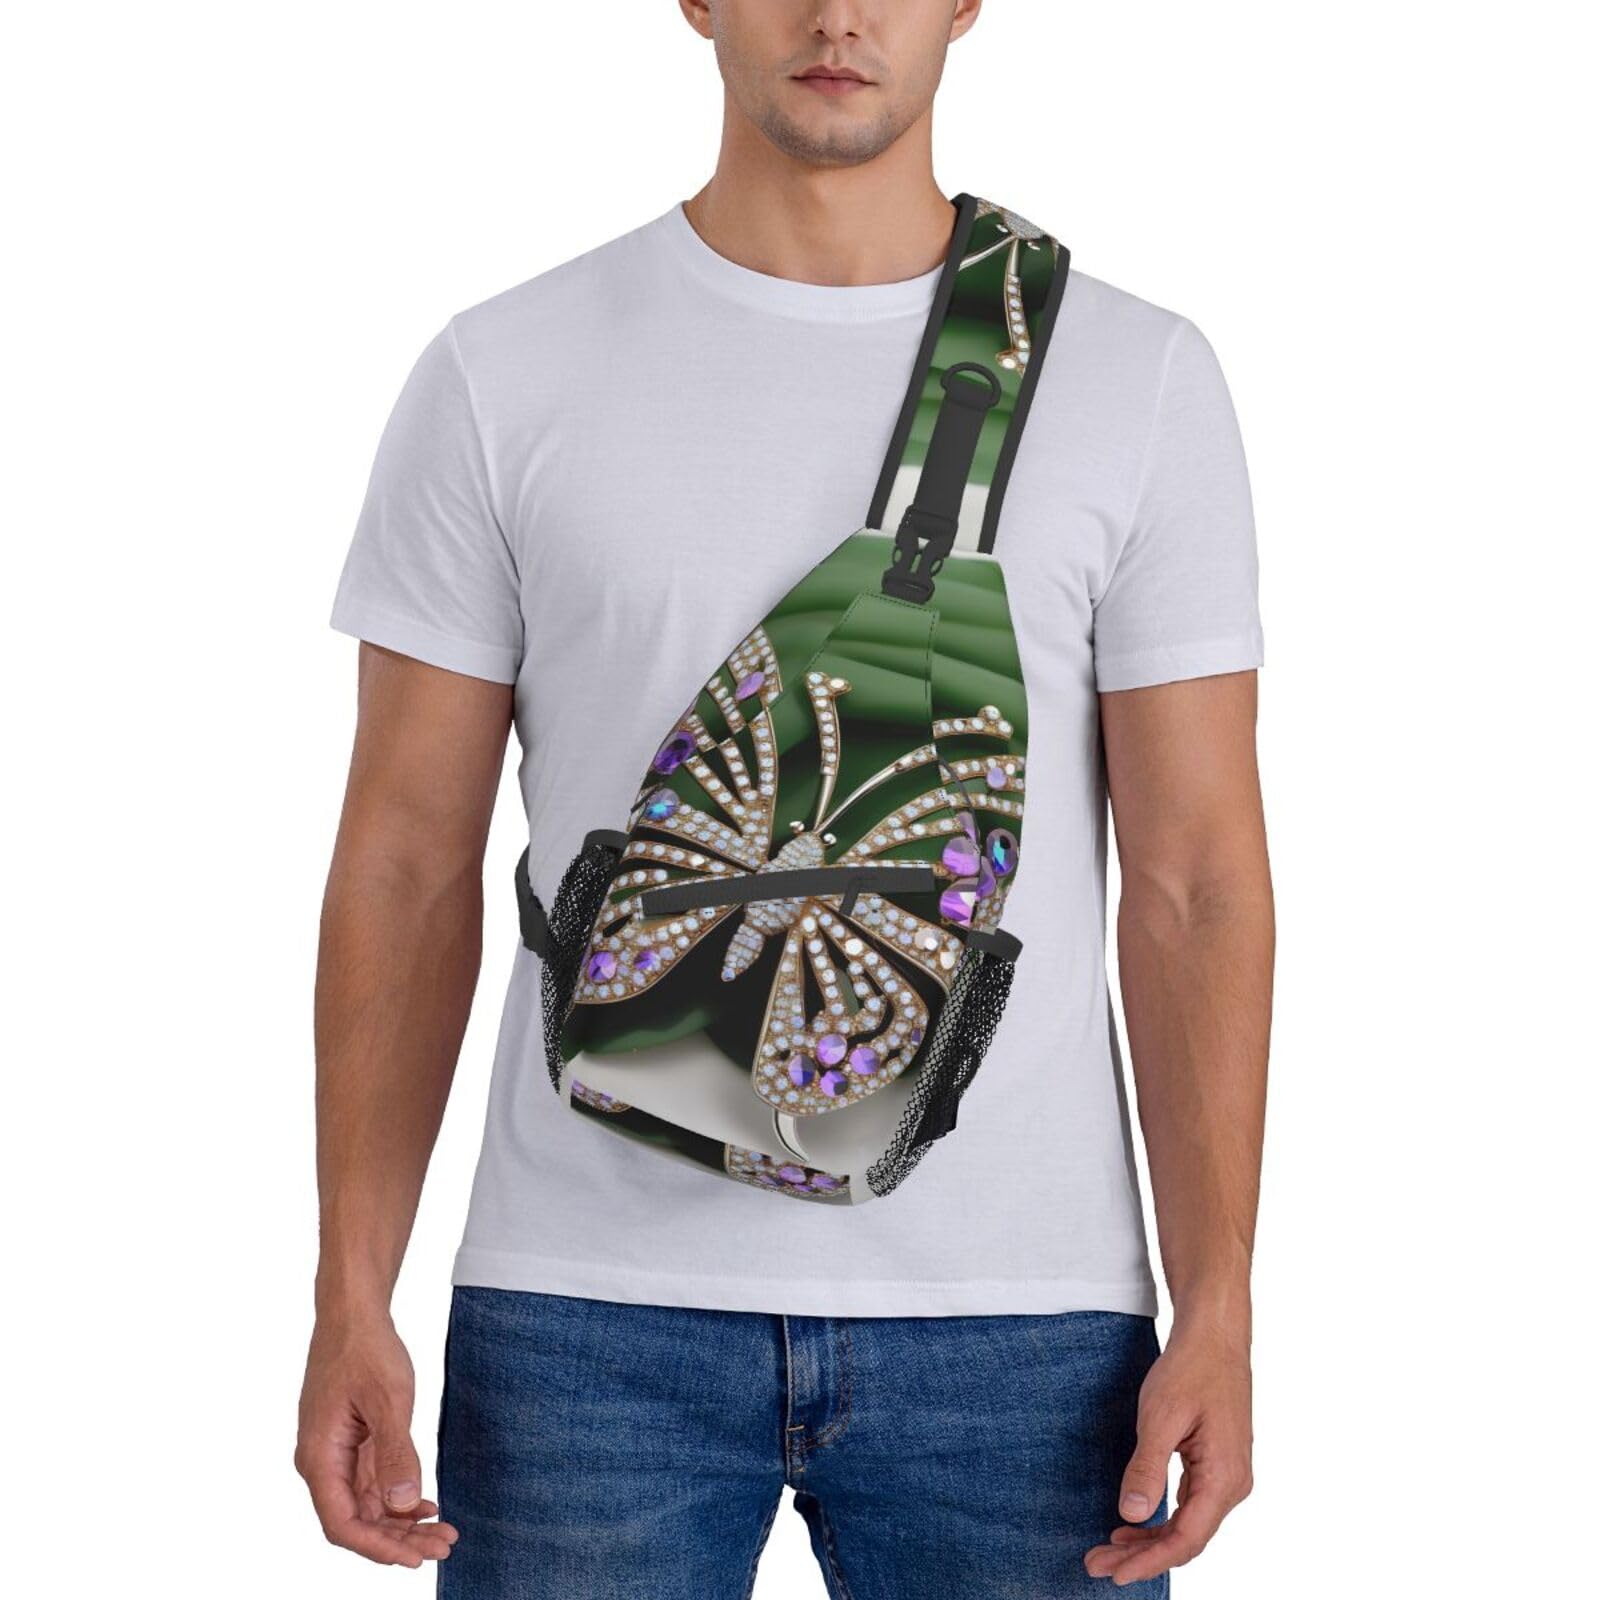 NEZIH Sling Bag For Women Men:Rose Gold Wallpaper Crossbody Sling Backpack - Shoulder Bag Chest Bag For Travel